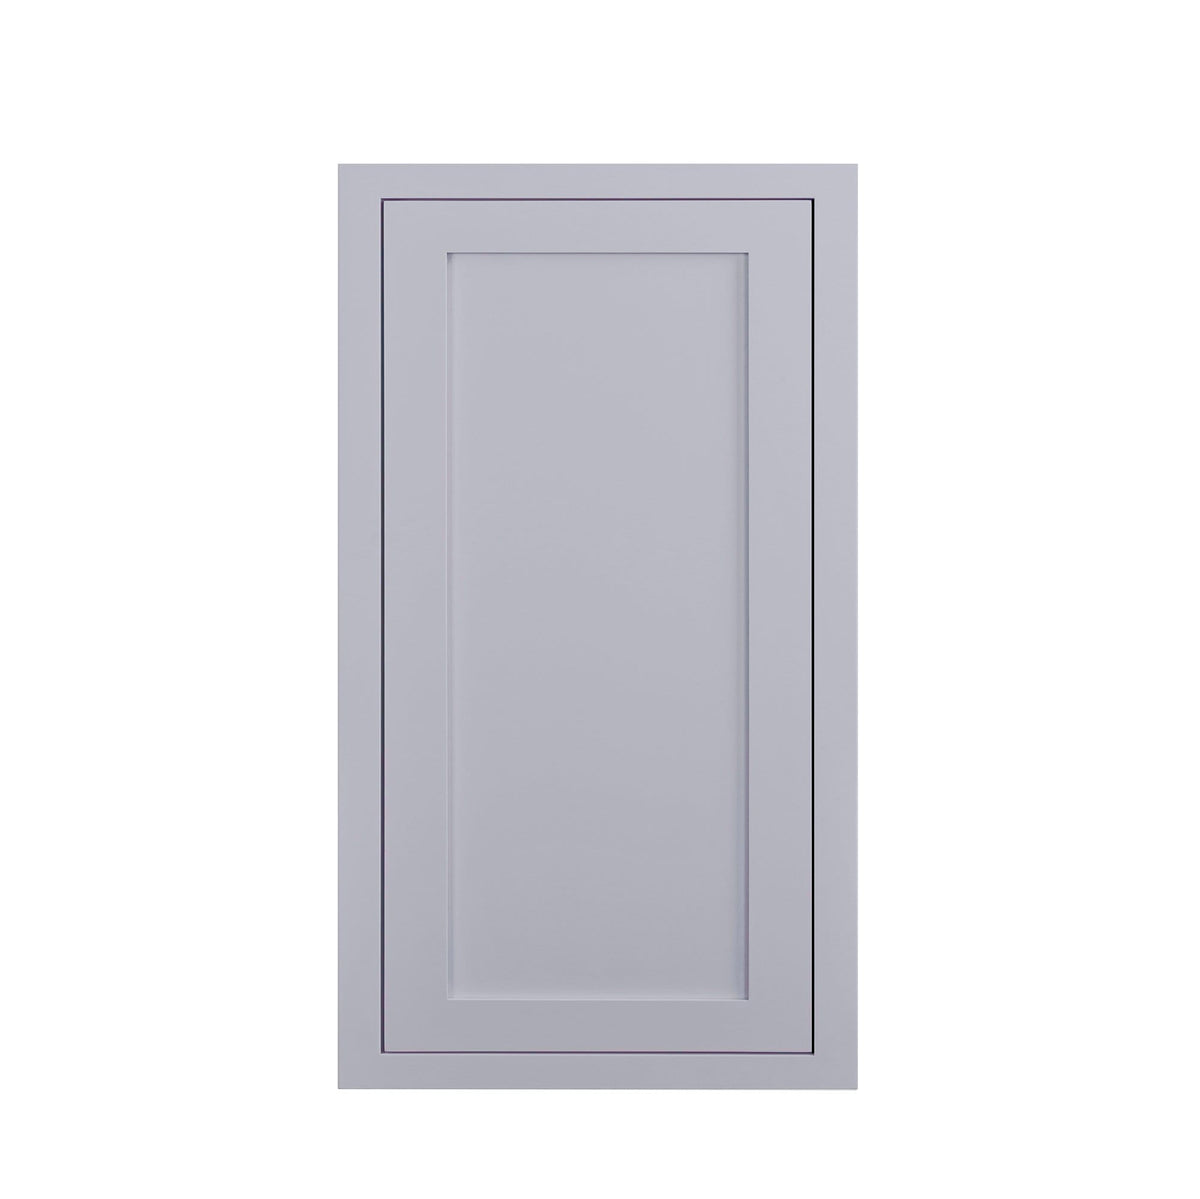 39" Tall Light Gray Inset Shaker Wall Cabinet - Single Door - 9", 12", 15", 18" & 21" Wide